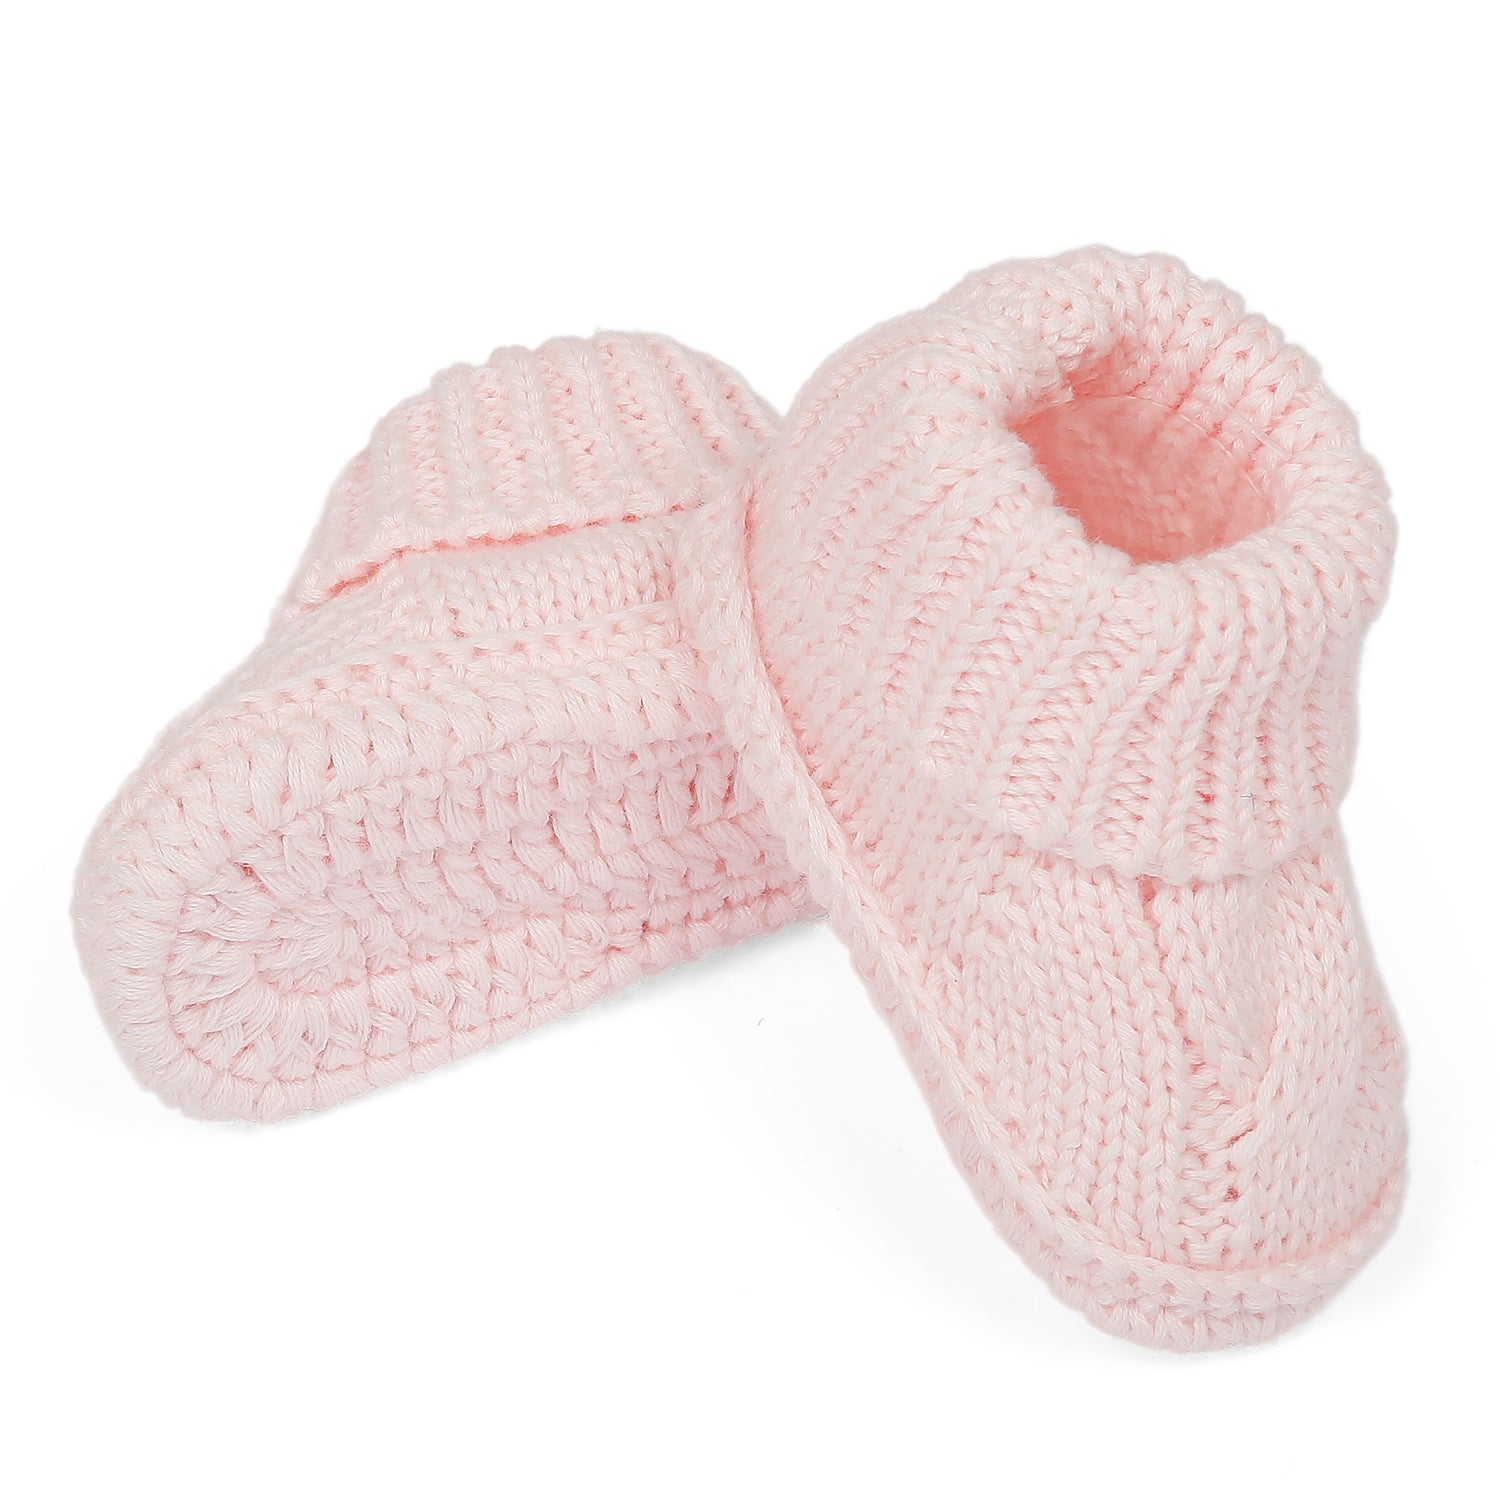 Knitted Newborn Crochet Socks Booties - Peach - Baby Moo